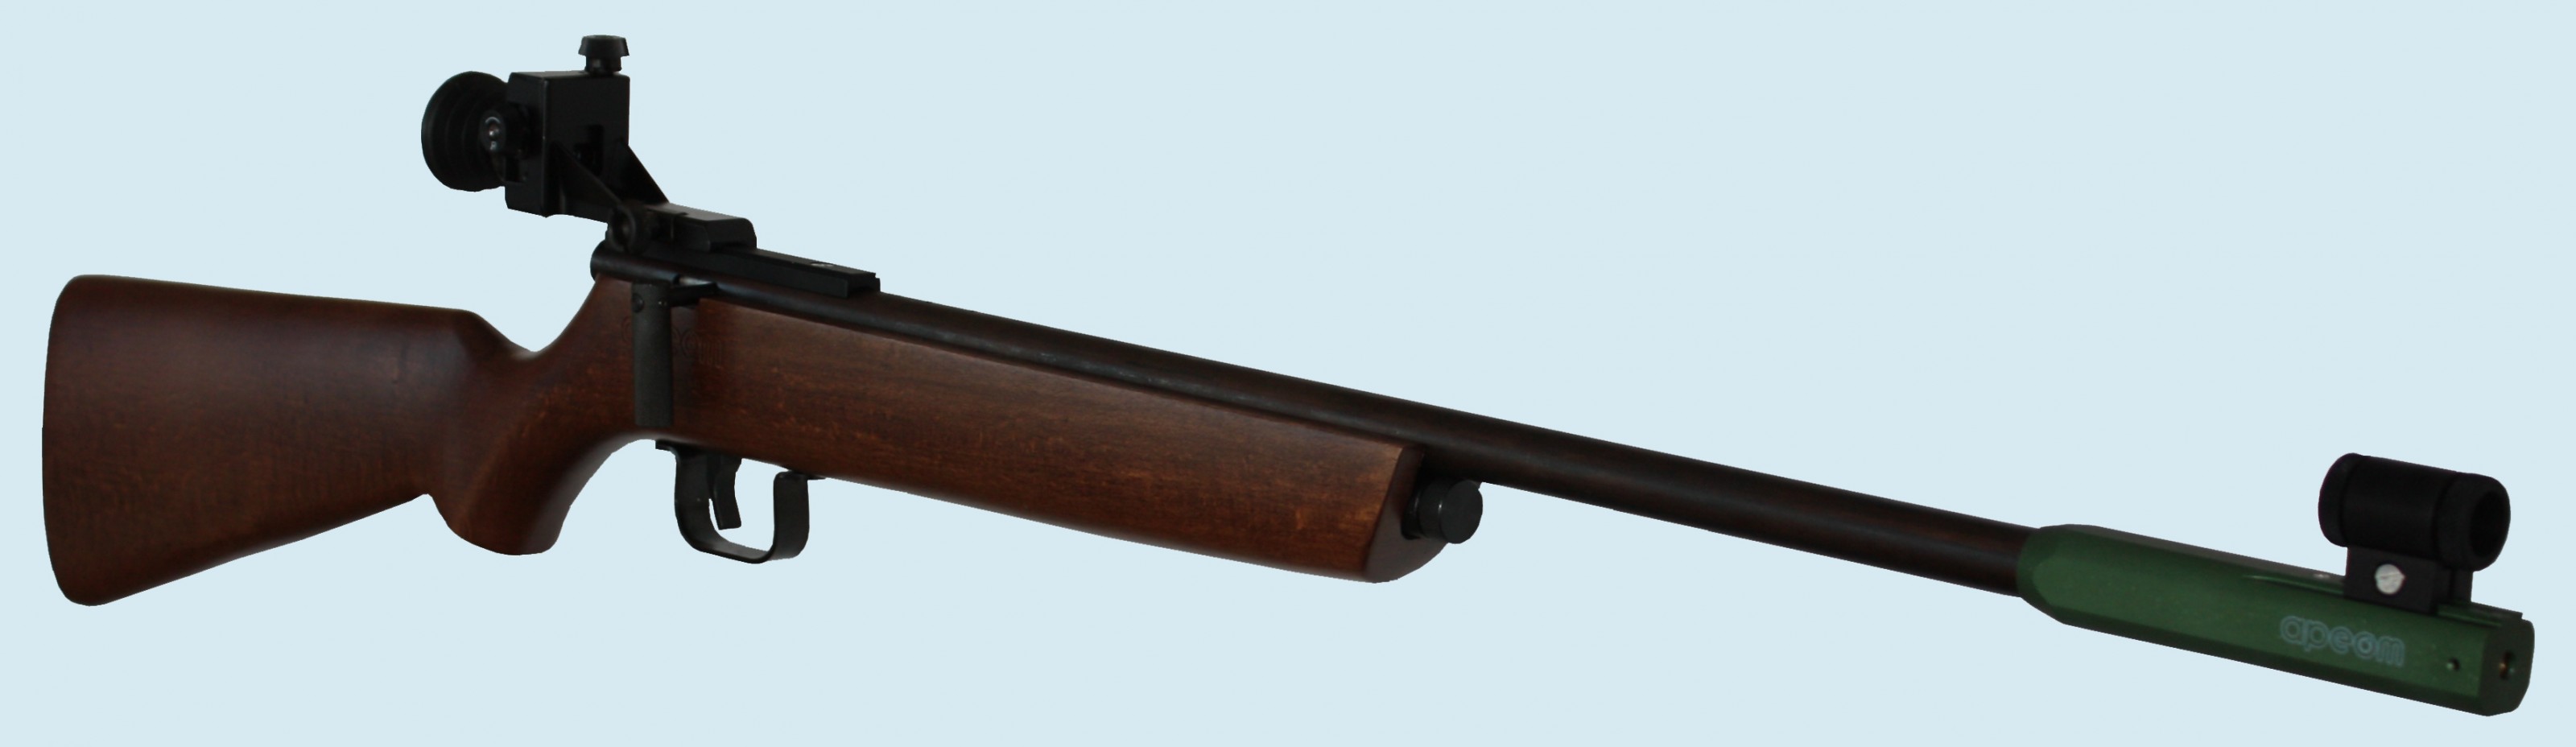 Laser Rifle E-Gun 303 - 